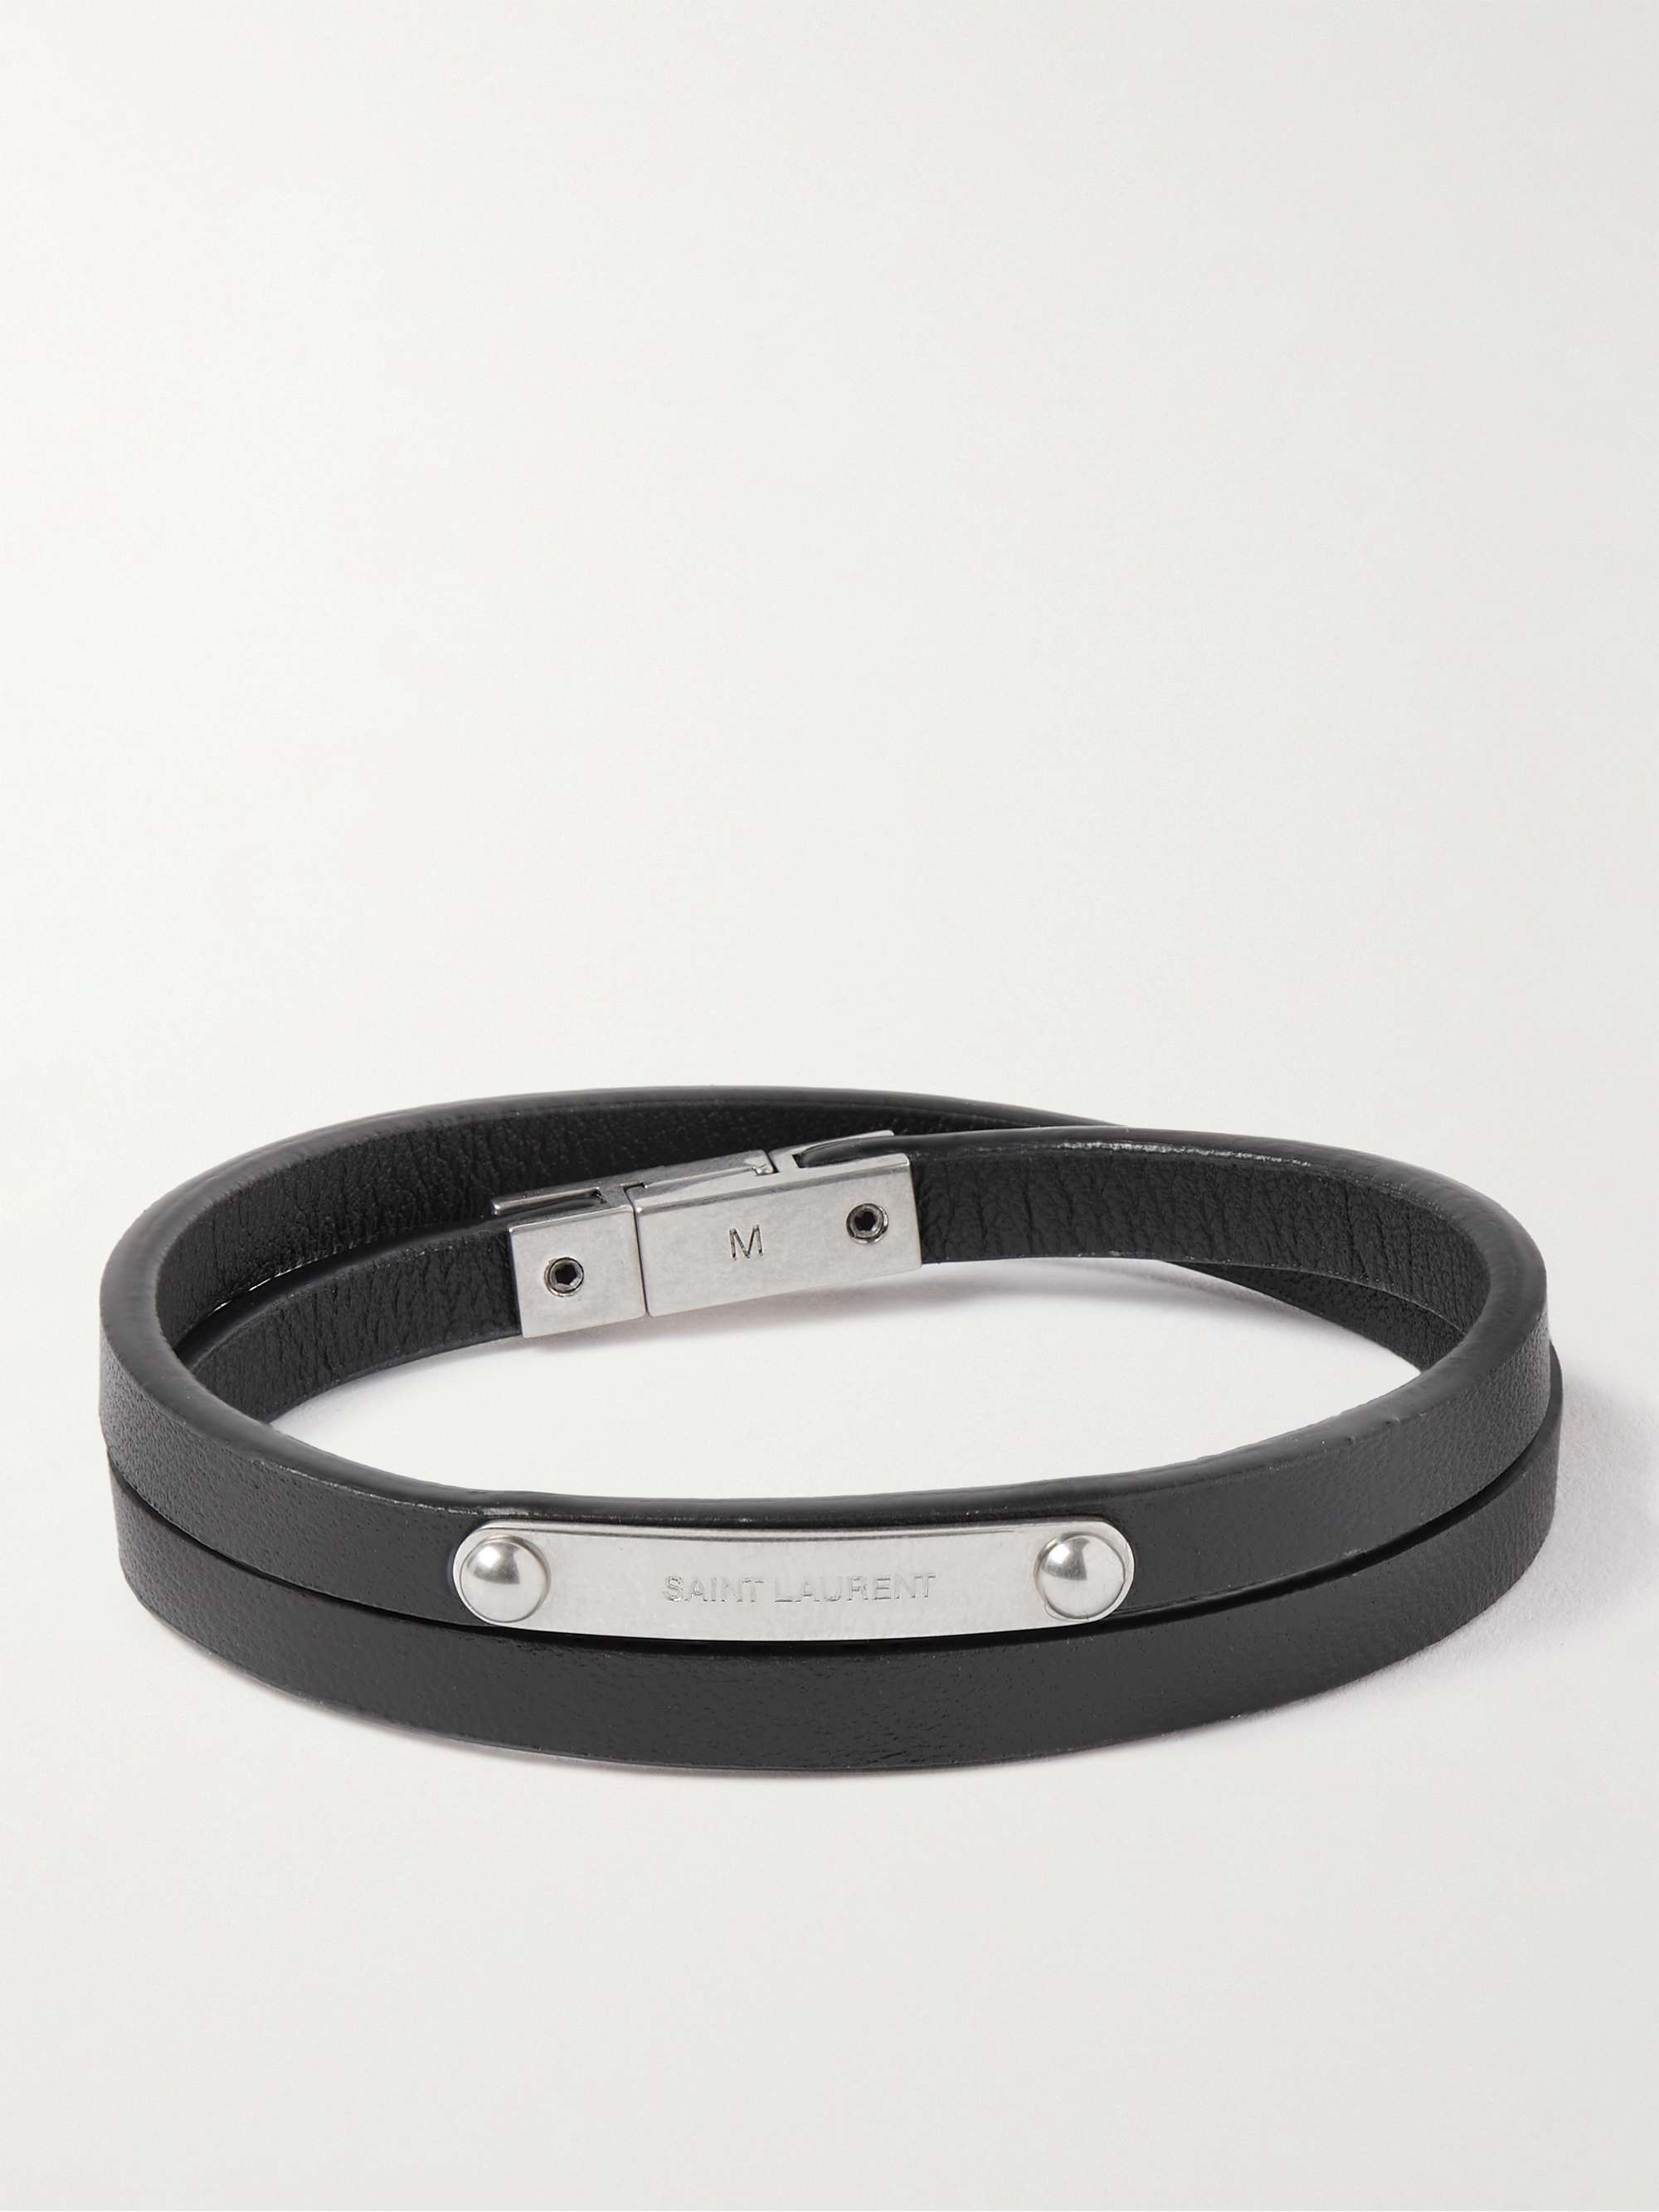 SAINT LAURENT Leather and Silver-Tone Wrap Bracelet for Men | MR PORTER